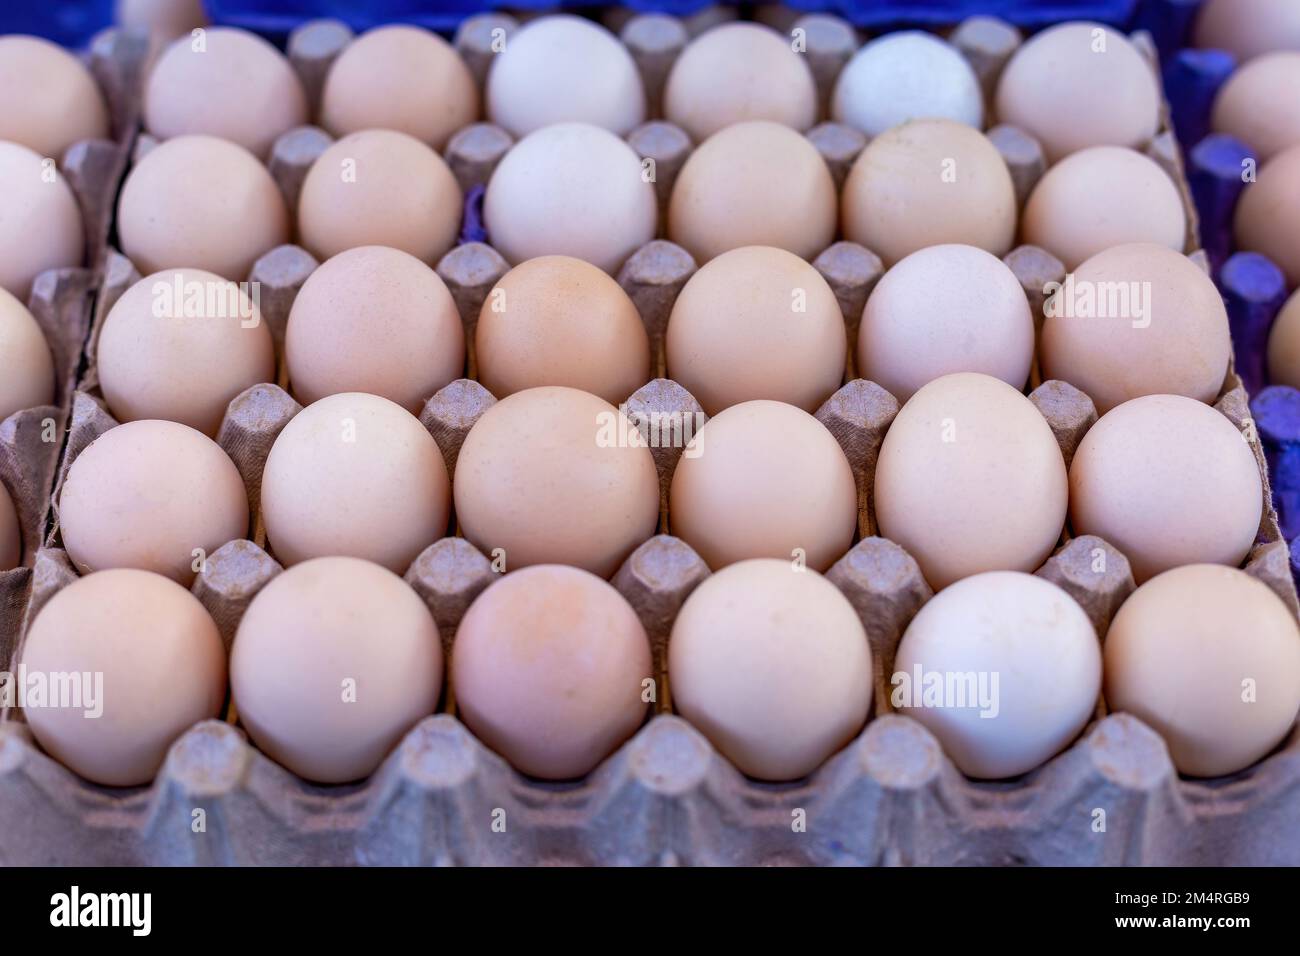 Village eggs sold in the market in Turkey Stock Photo